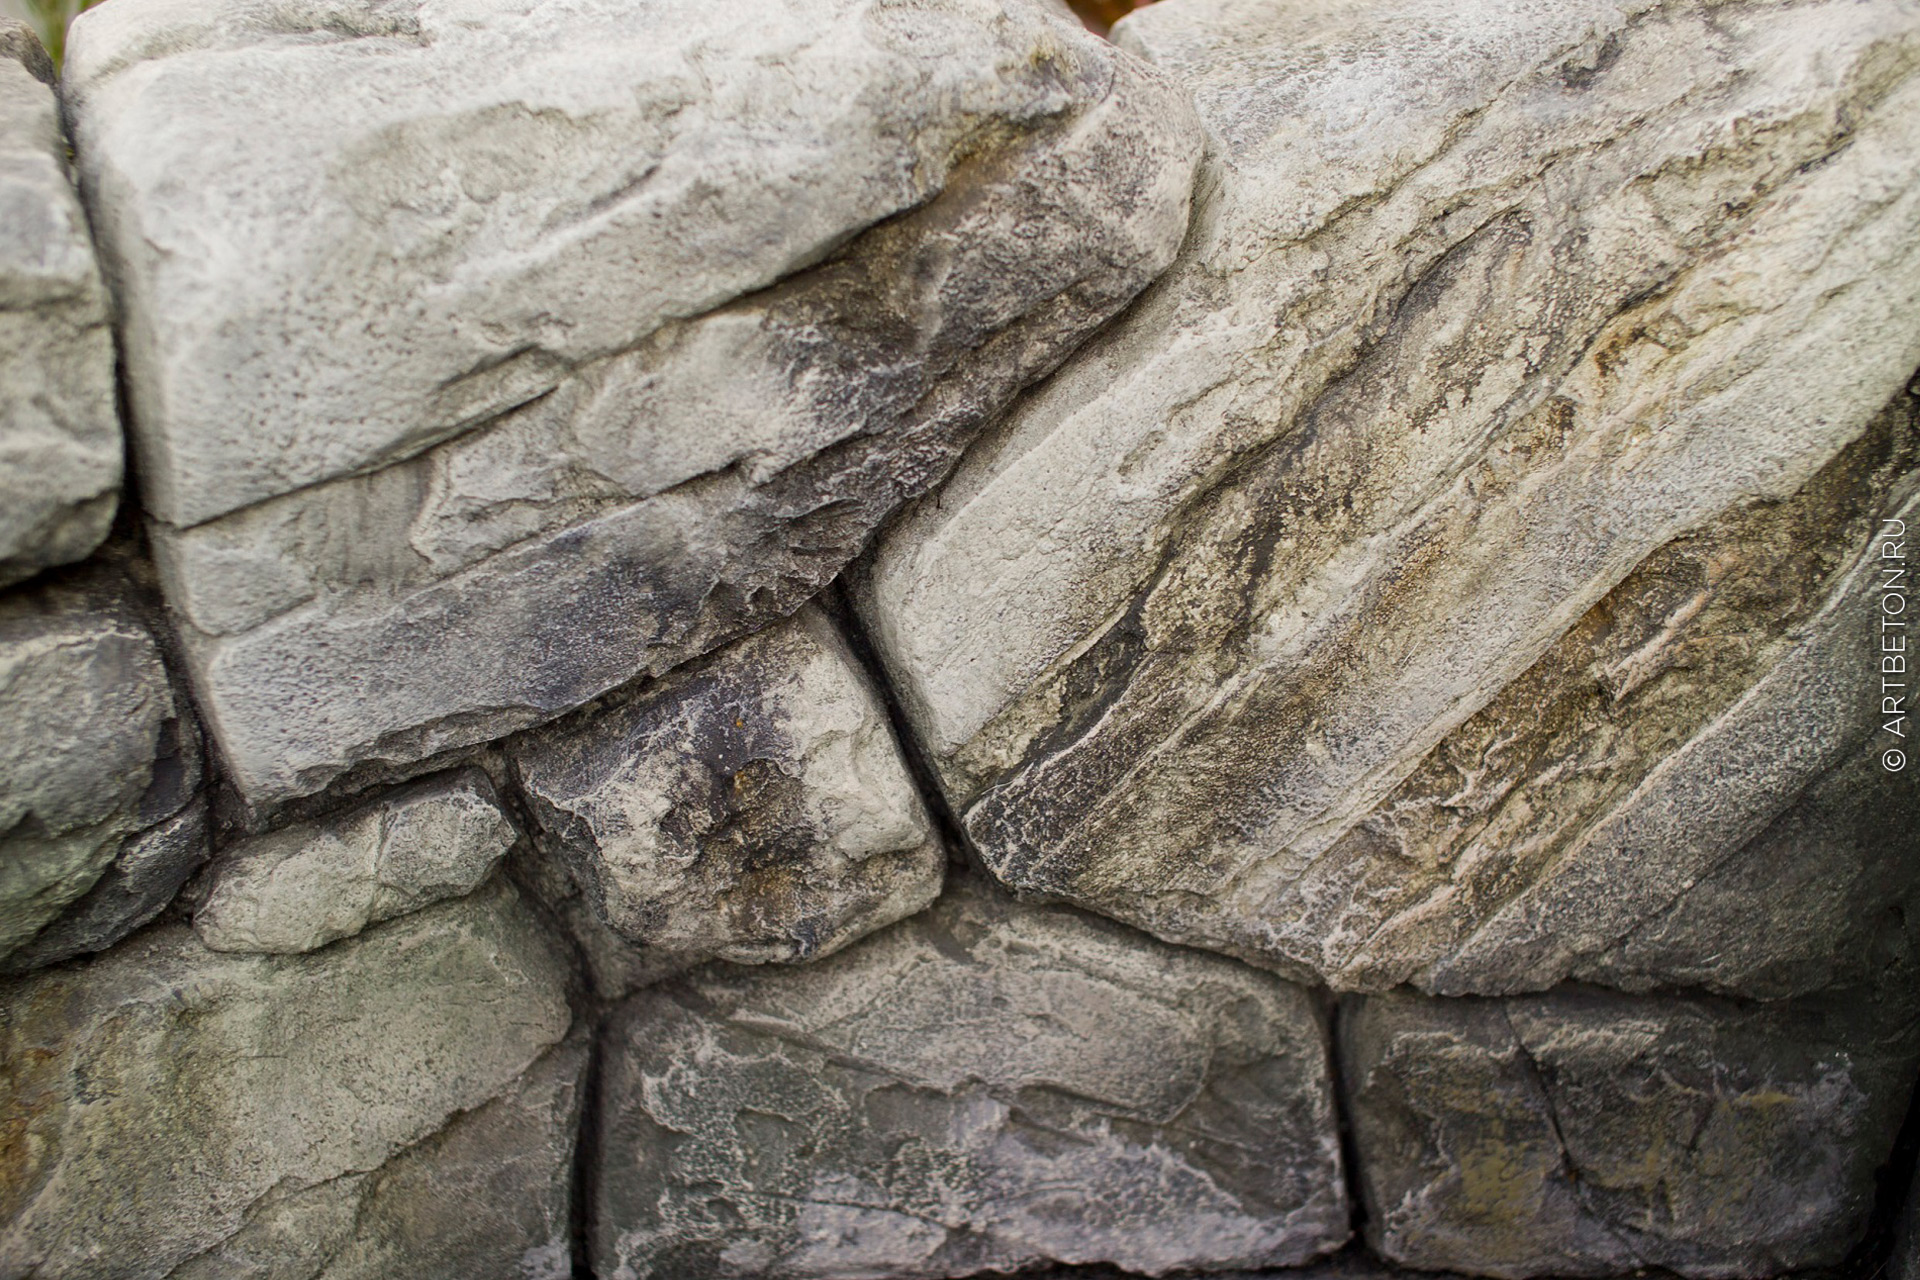 Concrete stone. Имитация дикого камня. Камни из архитектурного бетона. Декоративный камень из бетона. Имитация природного камня (скала).